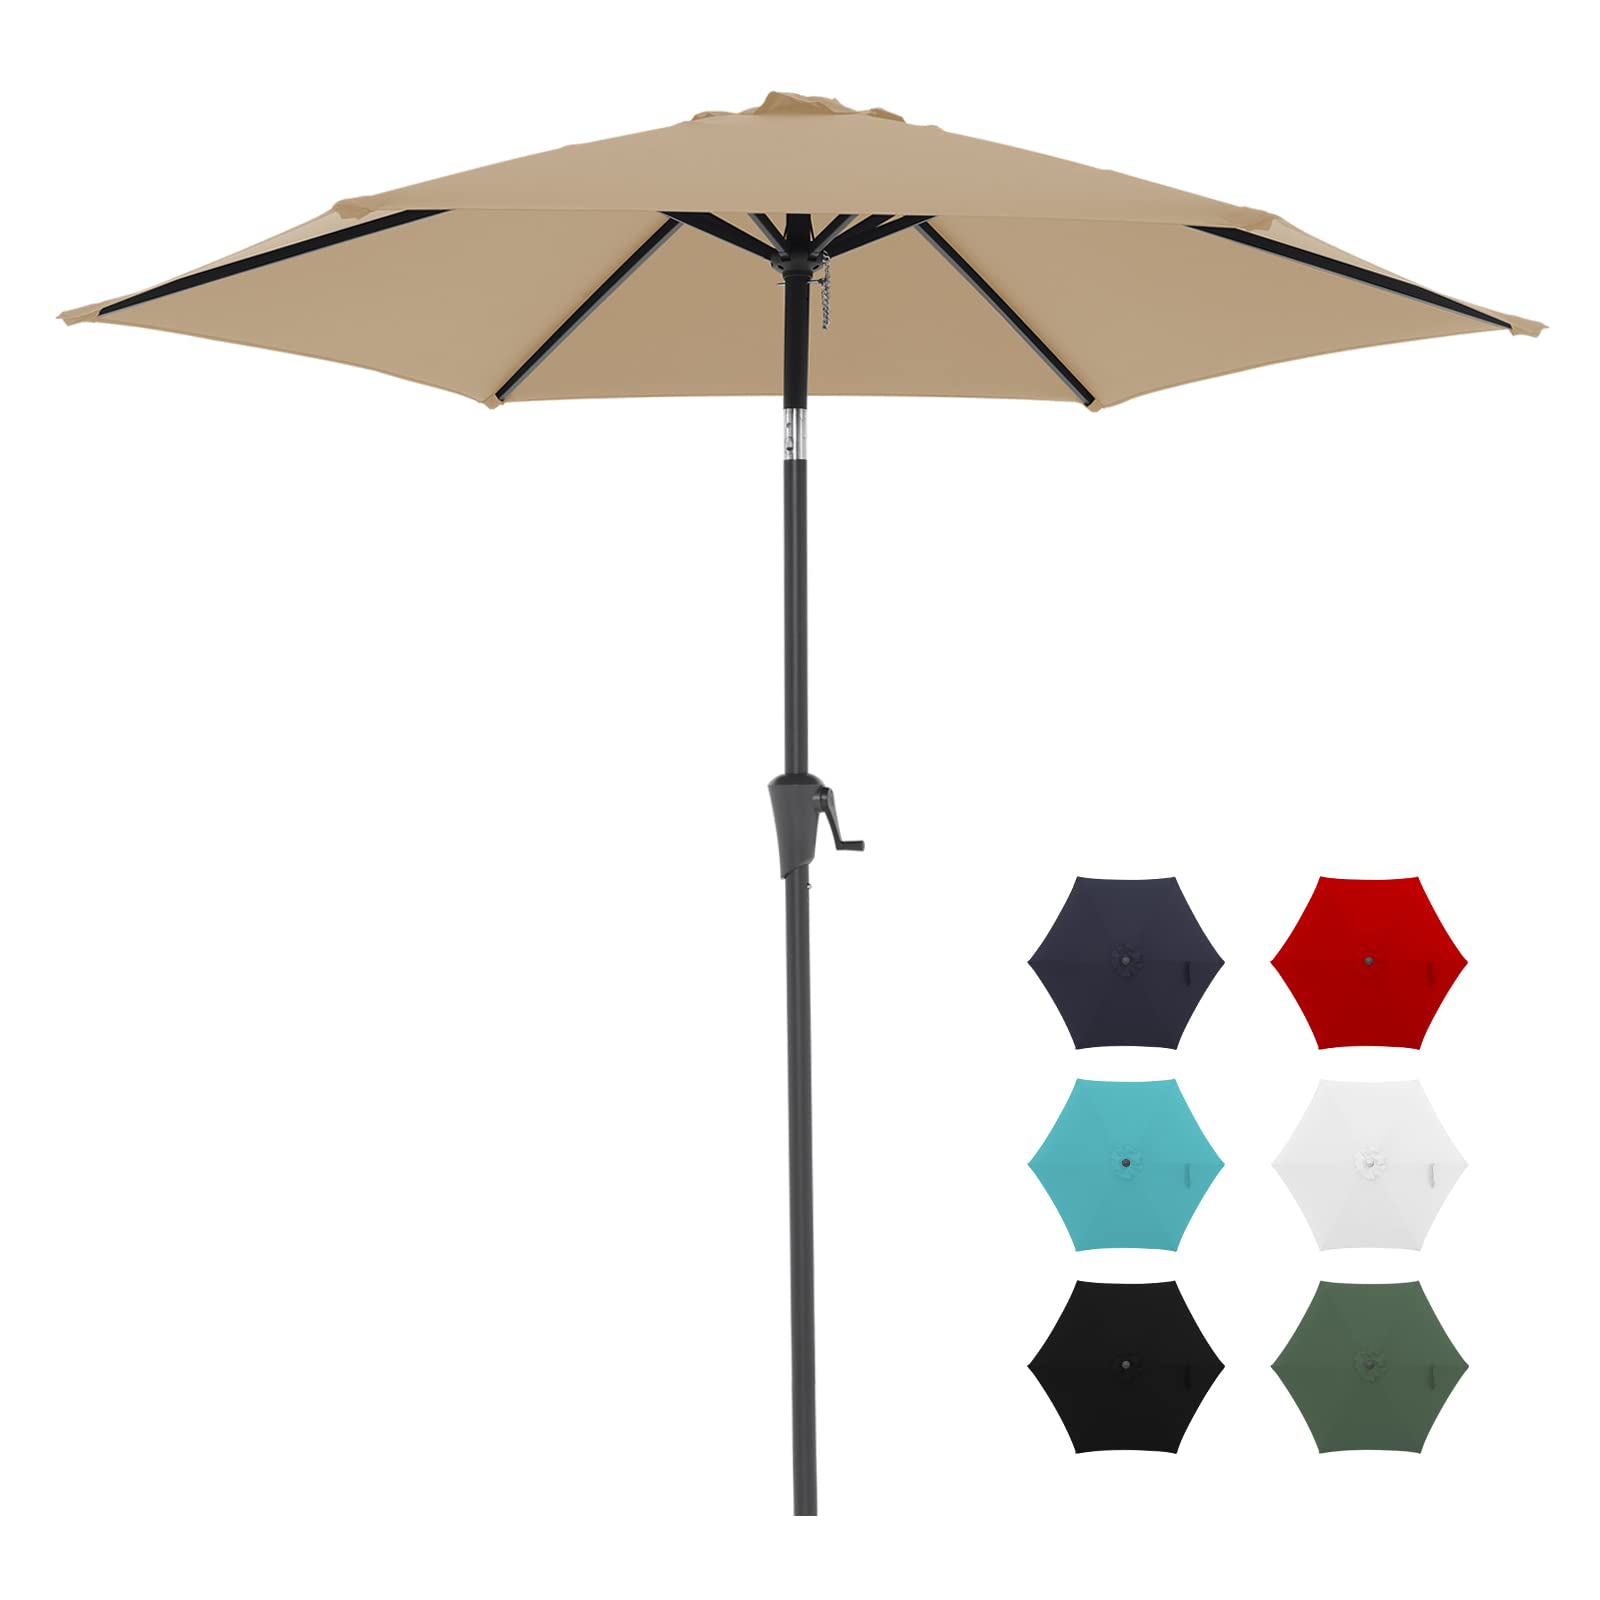 7.5 ft Patio Umbrella Outdoor Table Market Umbrella with Push Button Tilt and Crank, 6 Ribs, 8 colors